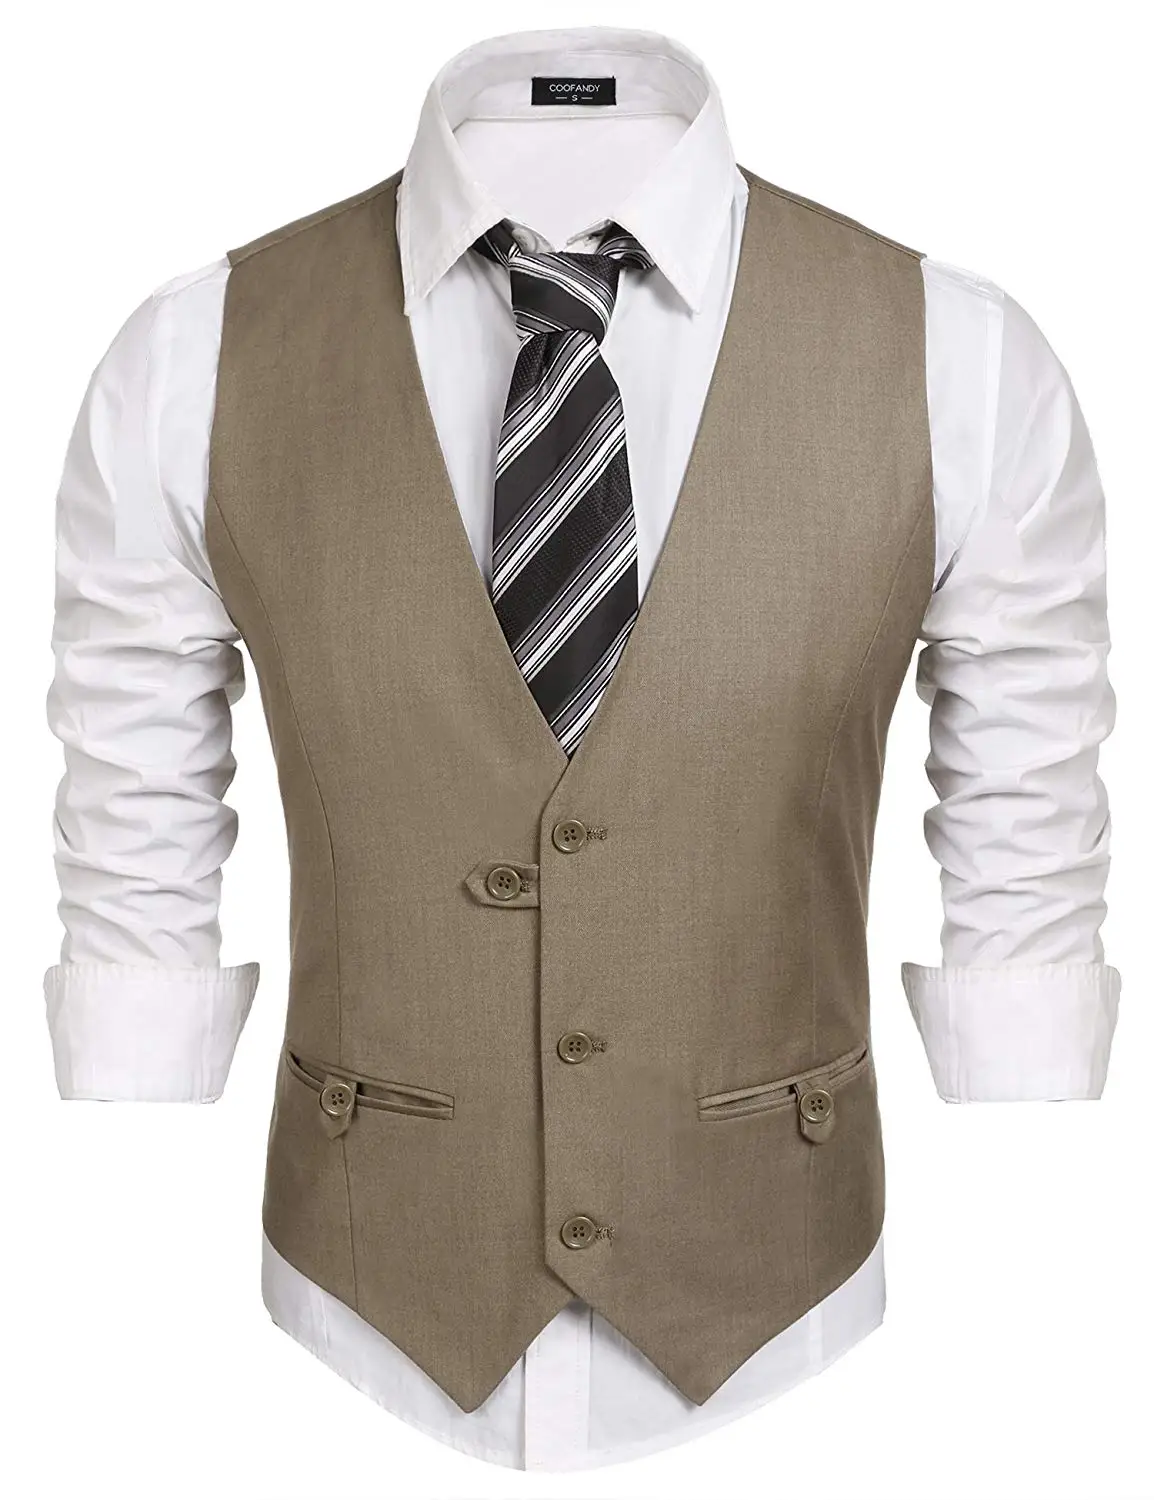 Buy COOFANDY Mens Business Suit Vest Slim Fit V-Neck Sleeveless ...